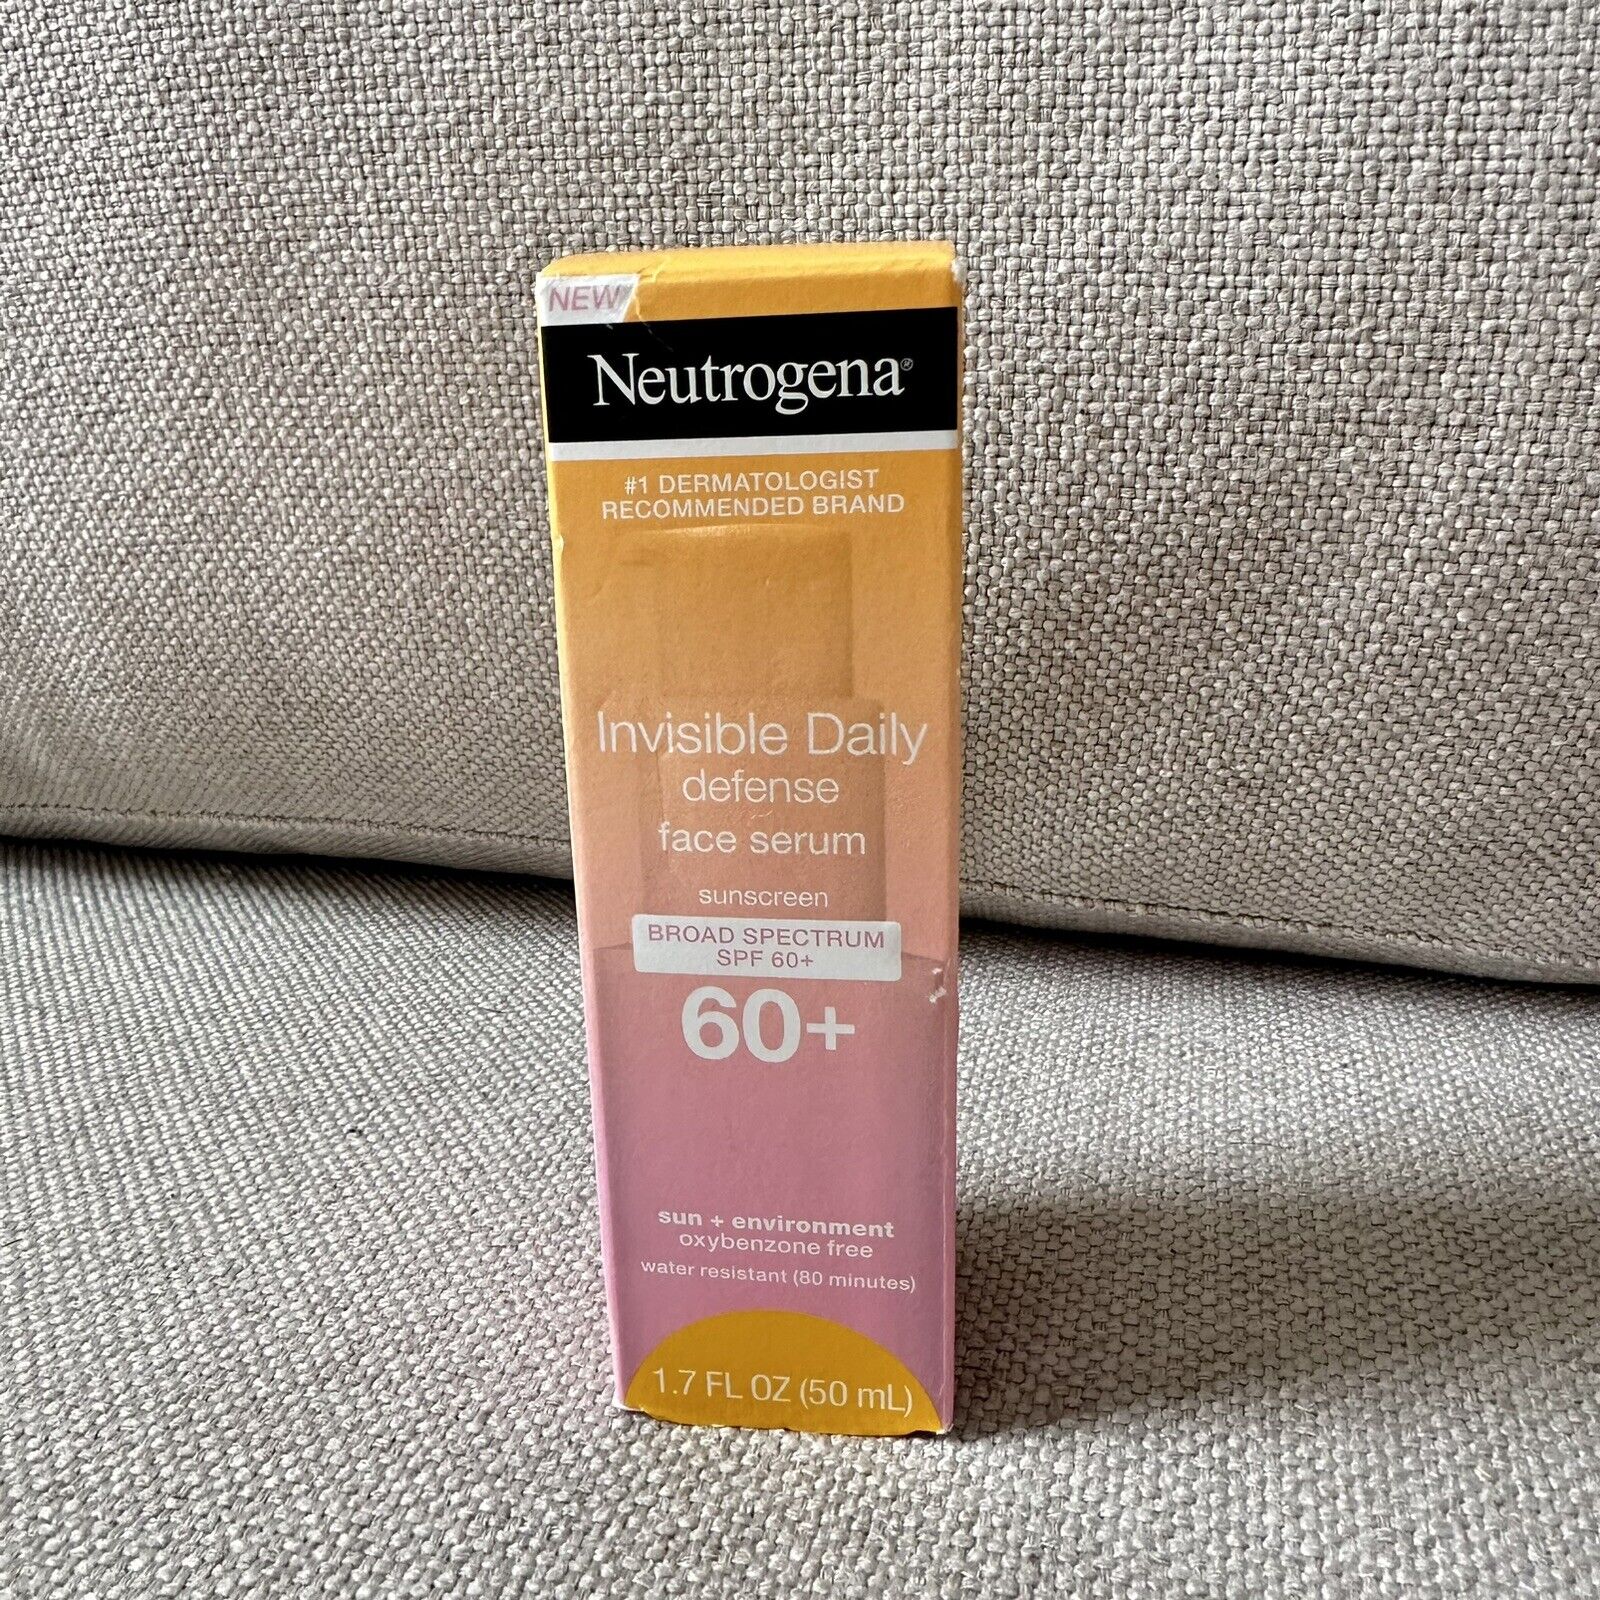 Neutrogena sunscreen price in Pakistan